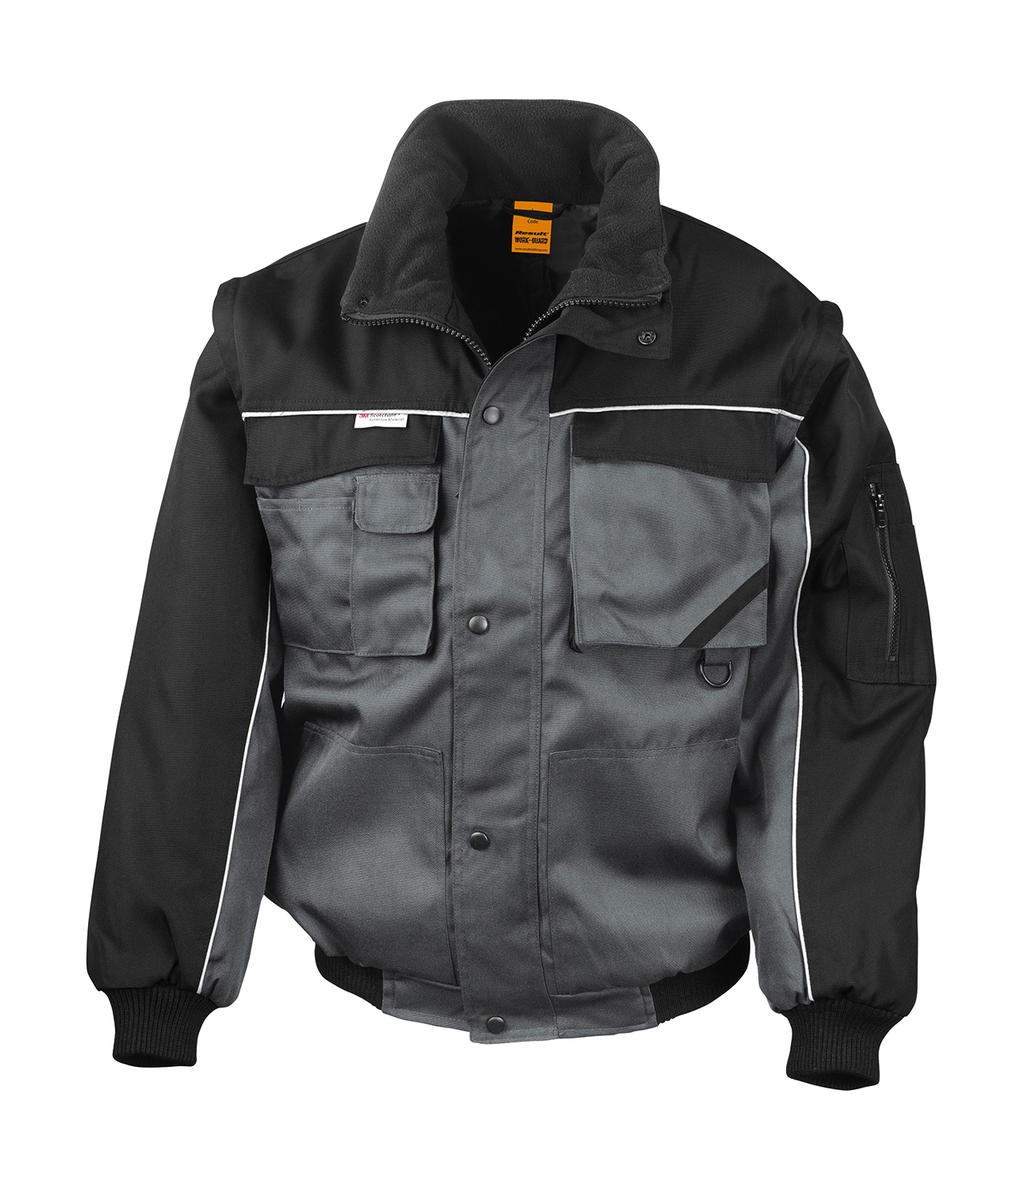  Heavy Duty Jacket in Farbe Grey/Black